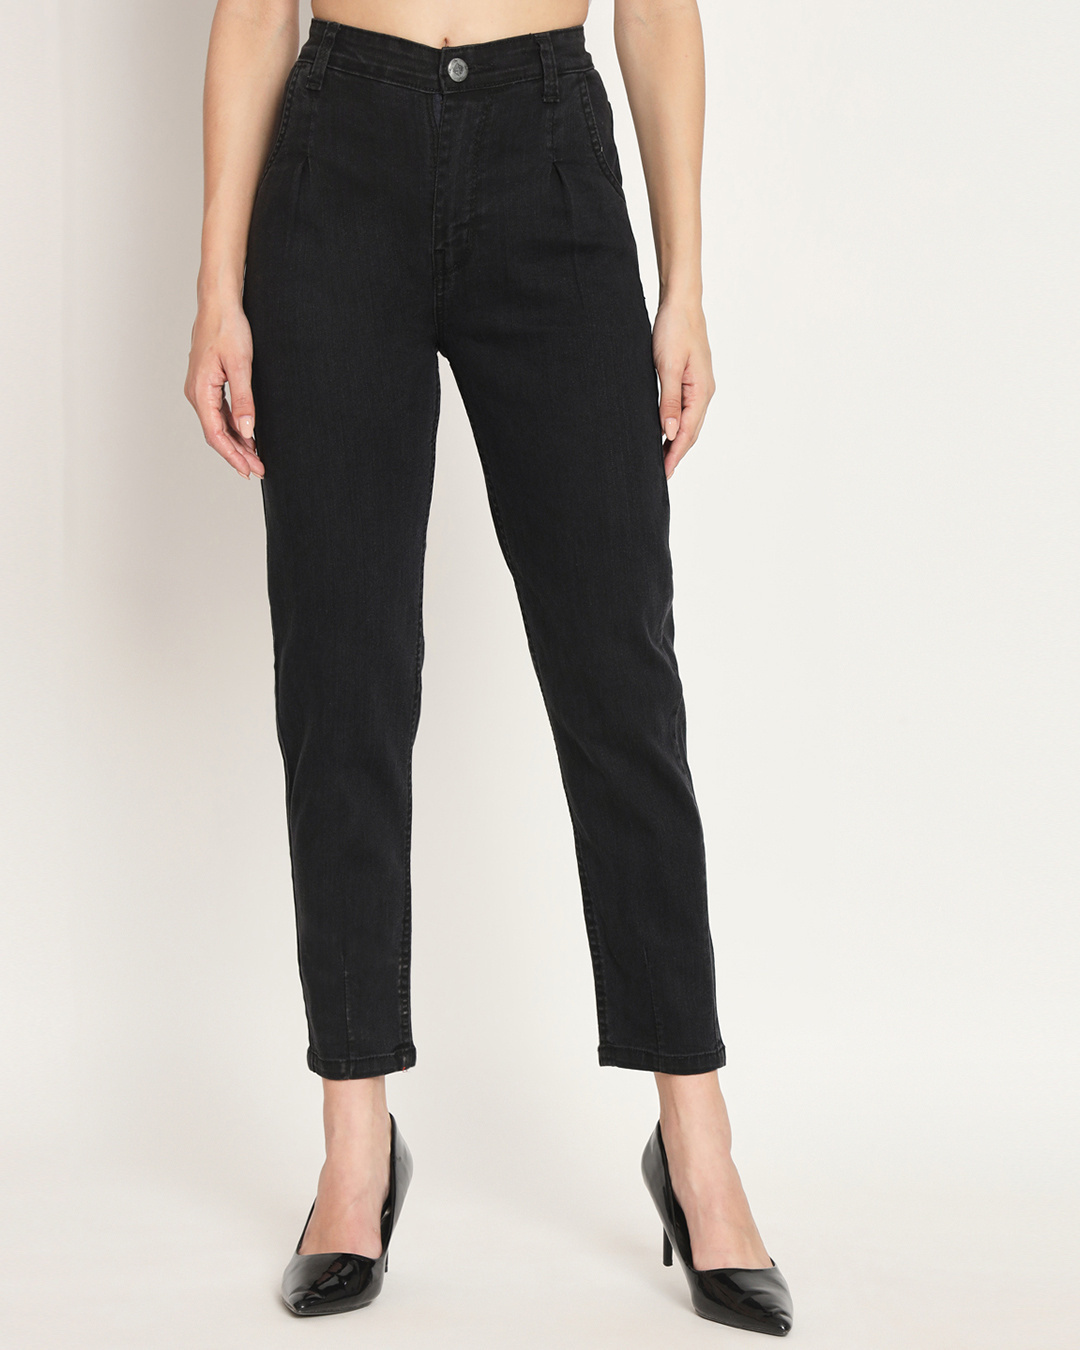 Buy Women's Black Slim Fit Jeans Online at Bewakoof